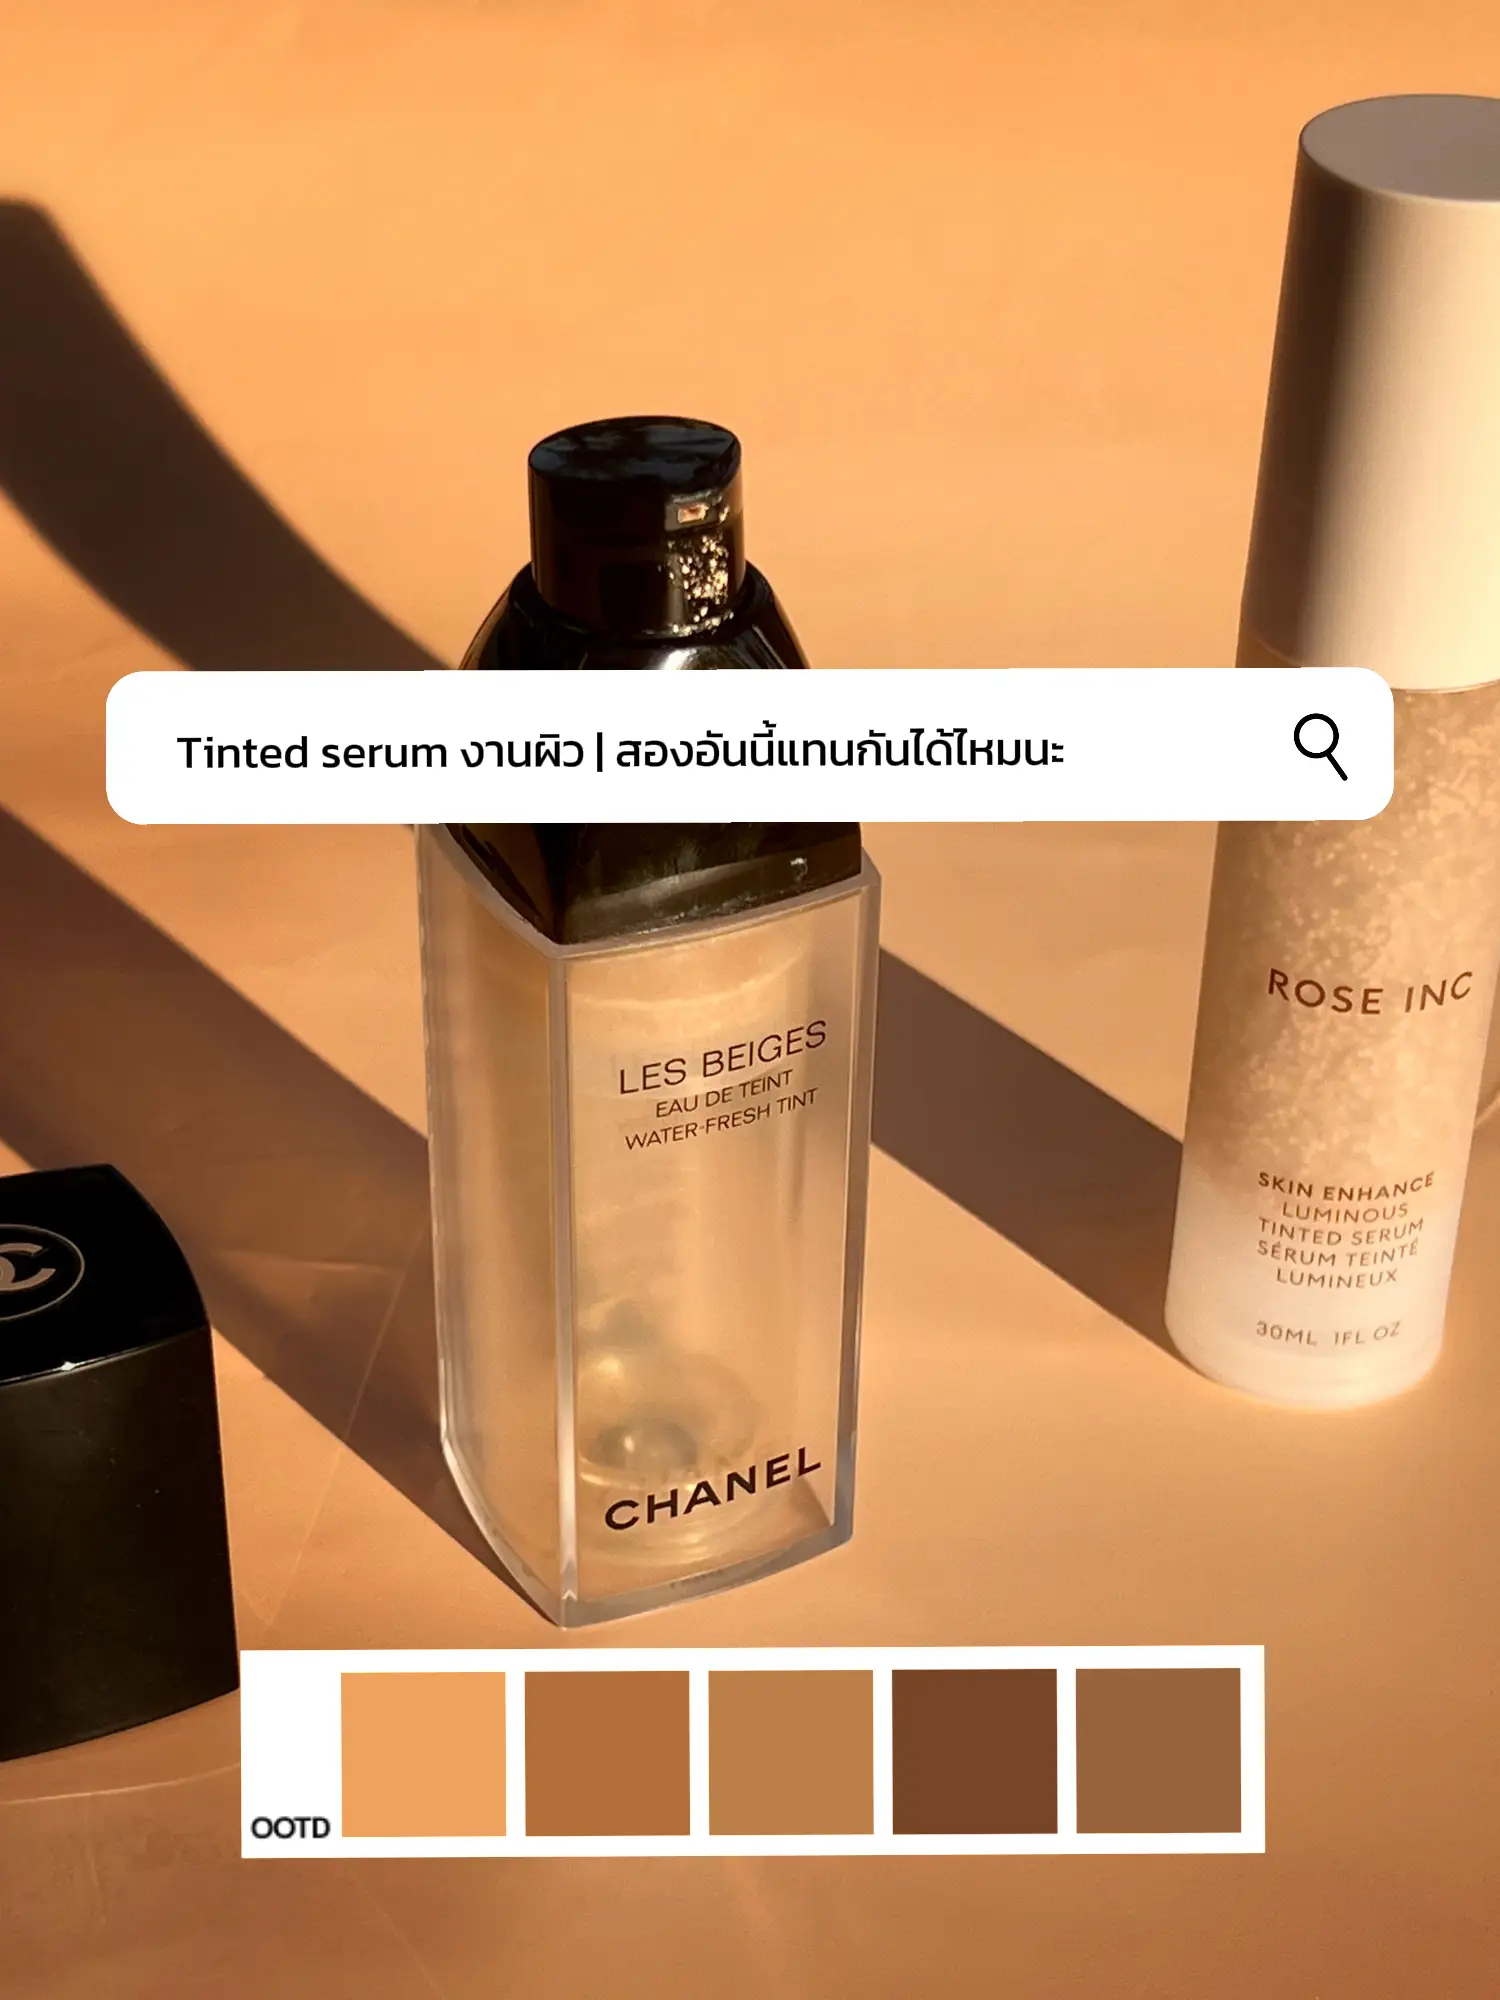 Rose Inc Skin Enhance Luminous Tinted Serum: a beauty editor's review